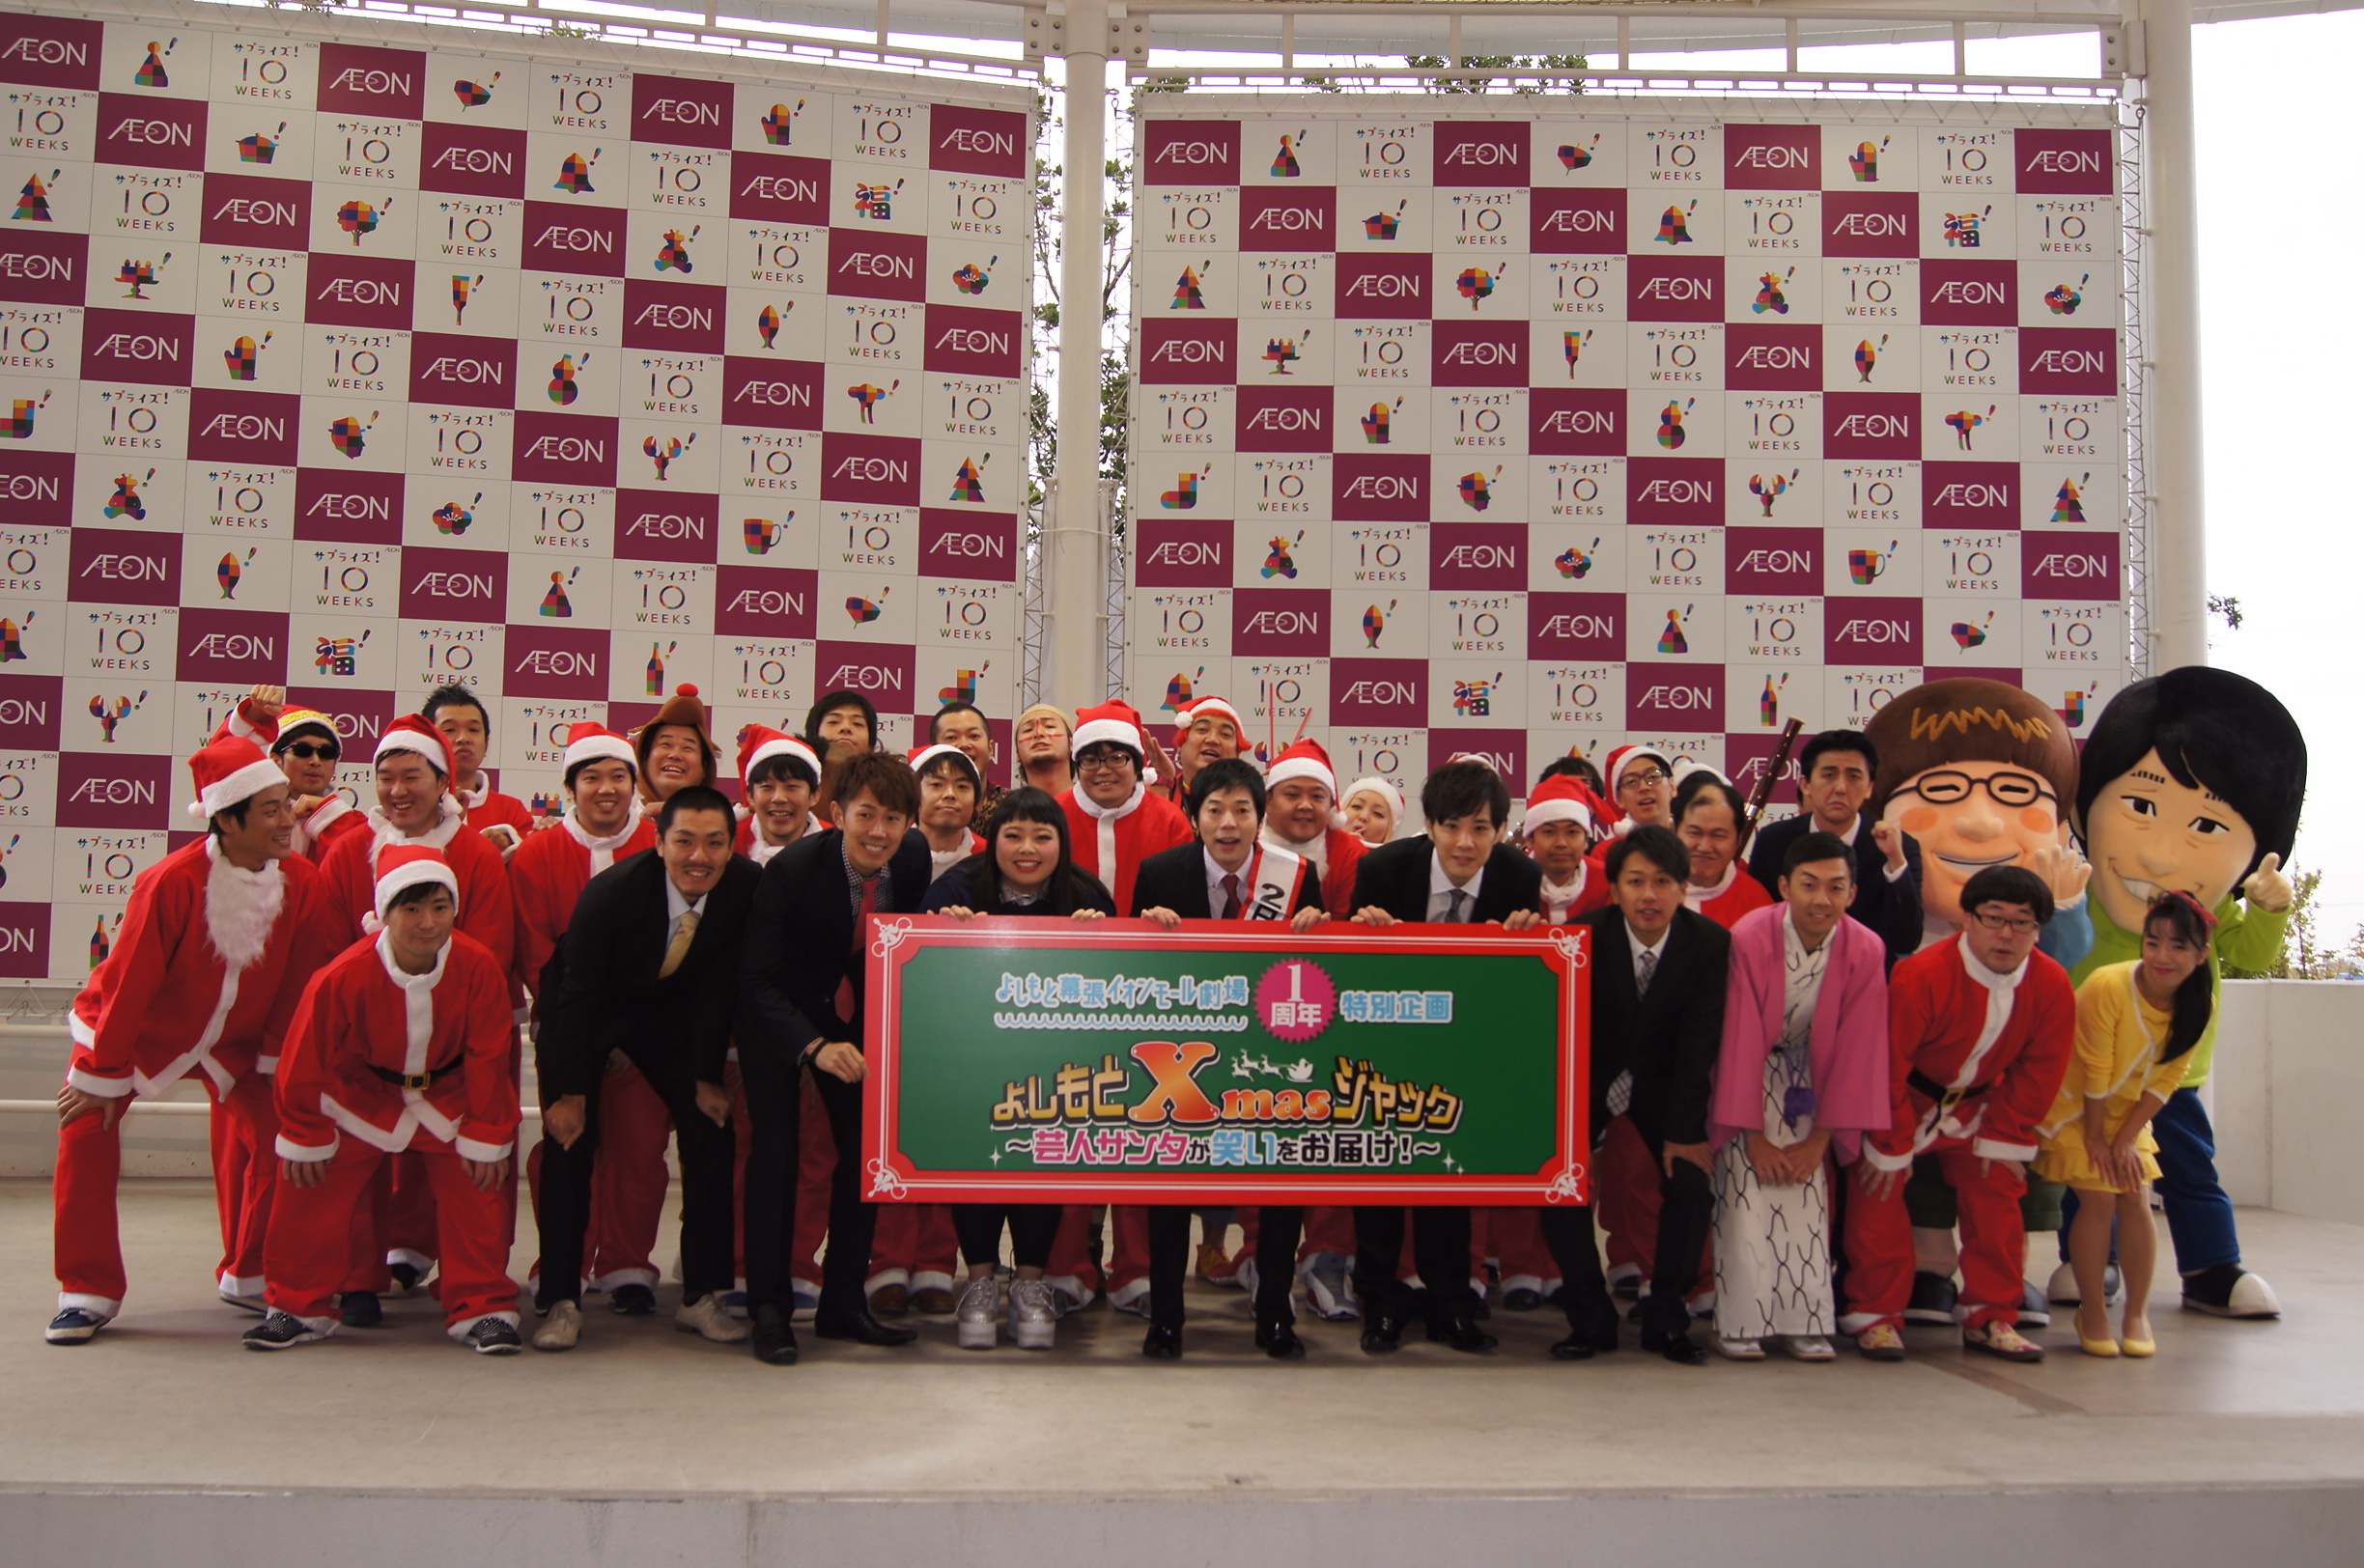 http://news.yoshimoto.co.jp/photos/uncategorized/2014/12/21/20141221132624-b484a2eb32b9a14fbc16ac58ded450bf37f2819b.jpg